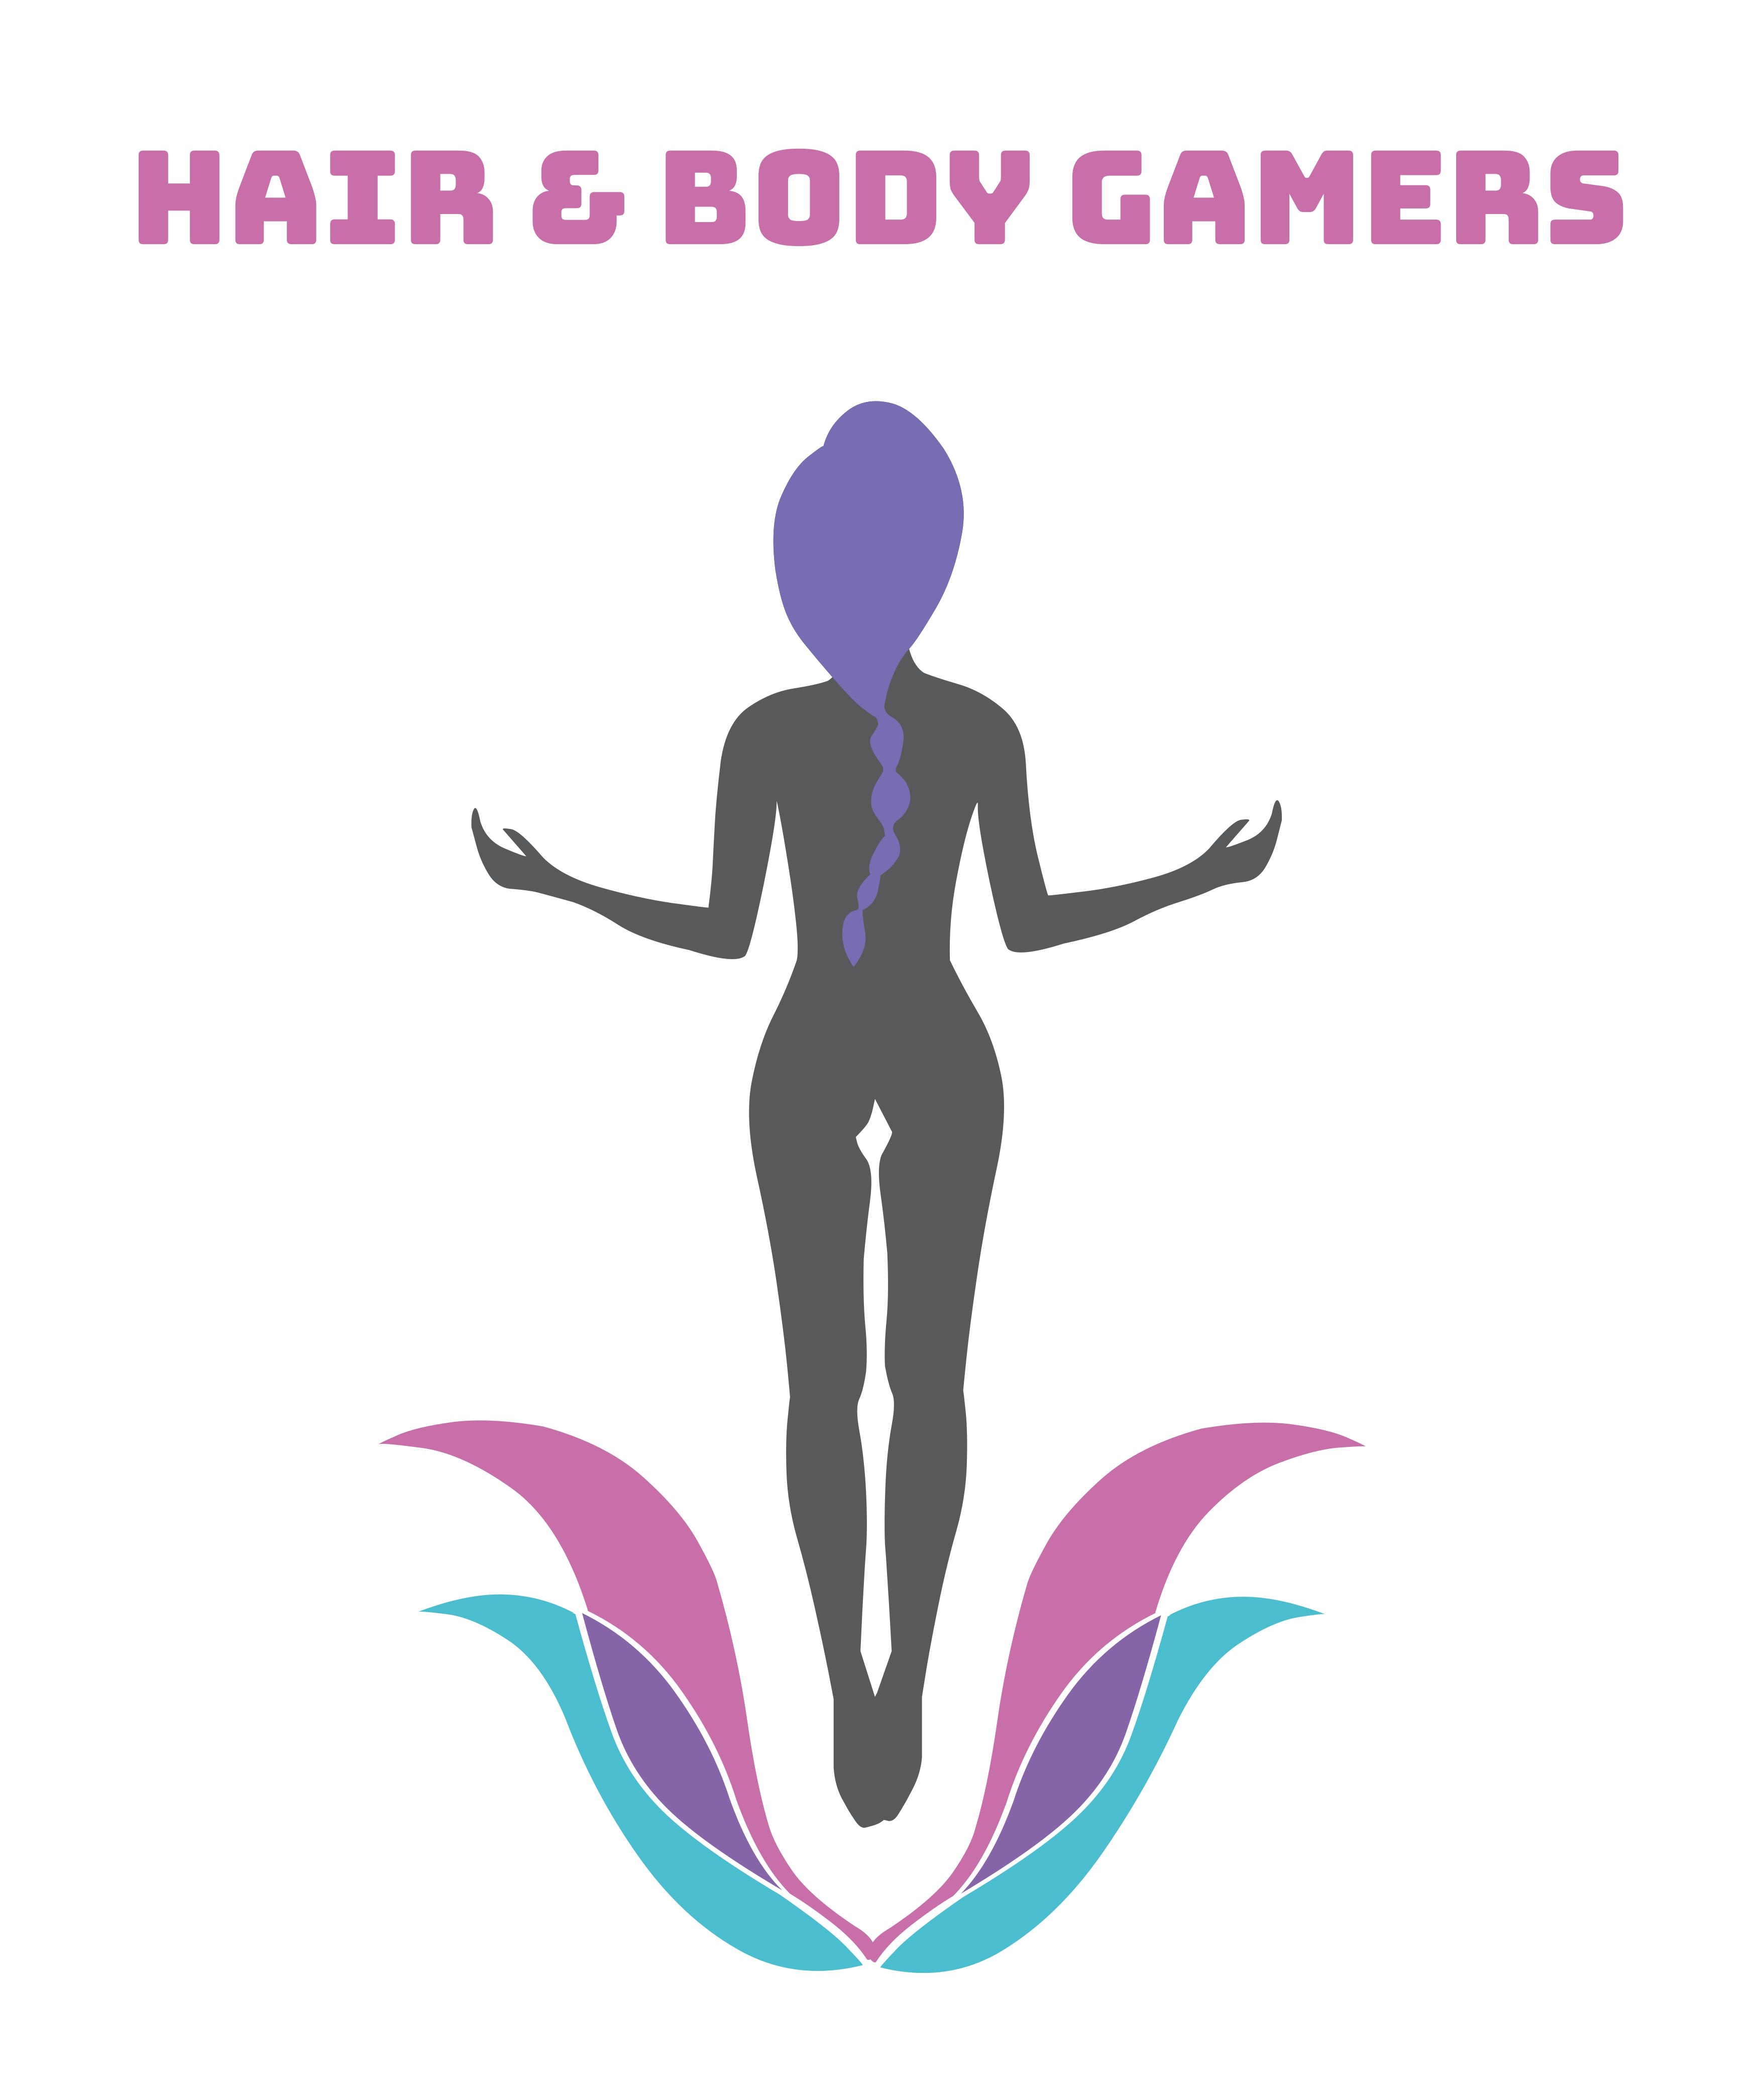 Hair & Body Gamers